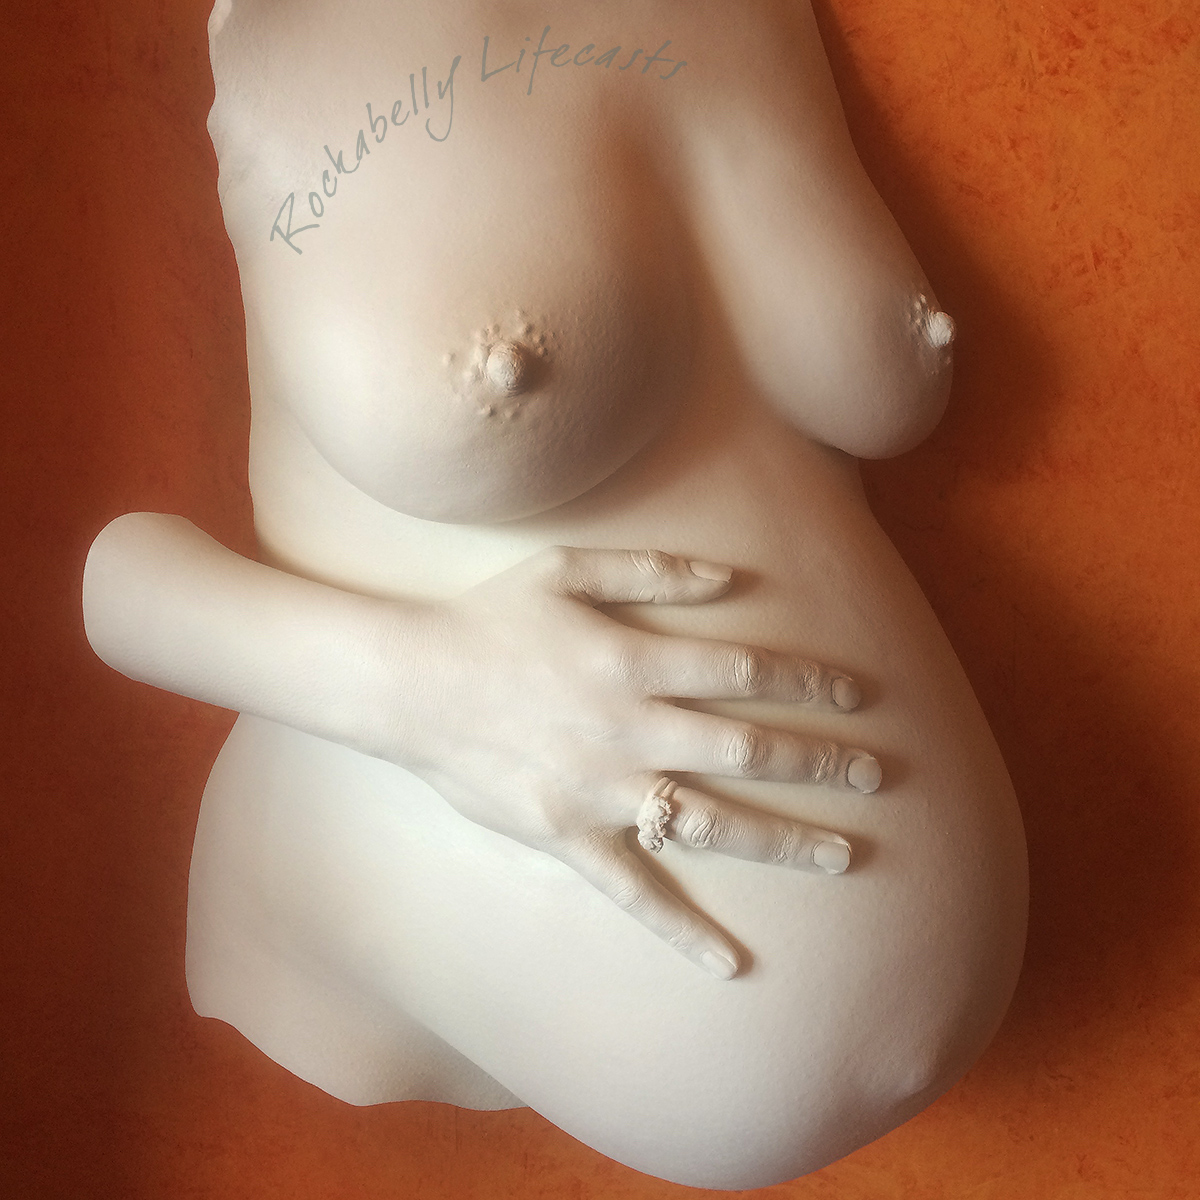 Pregnancy casting